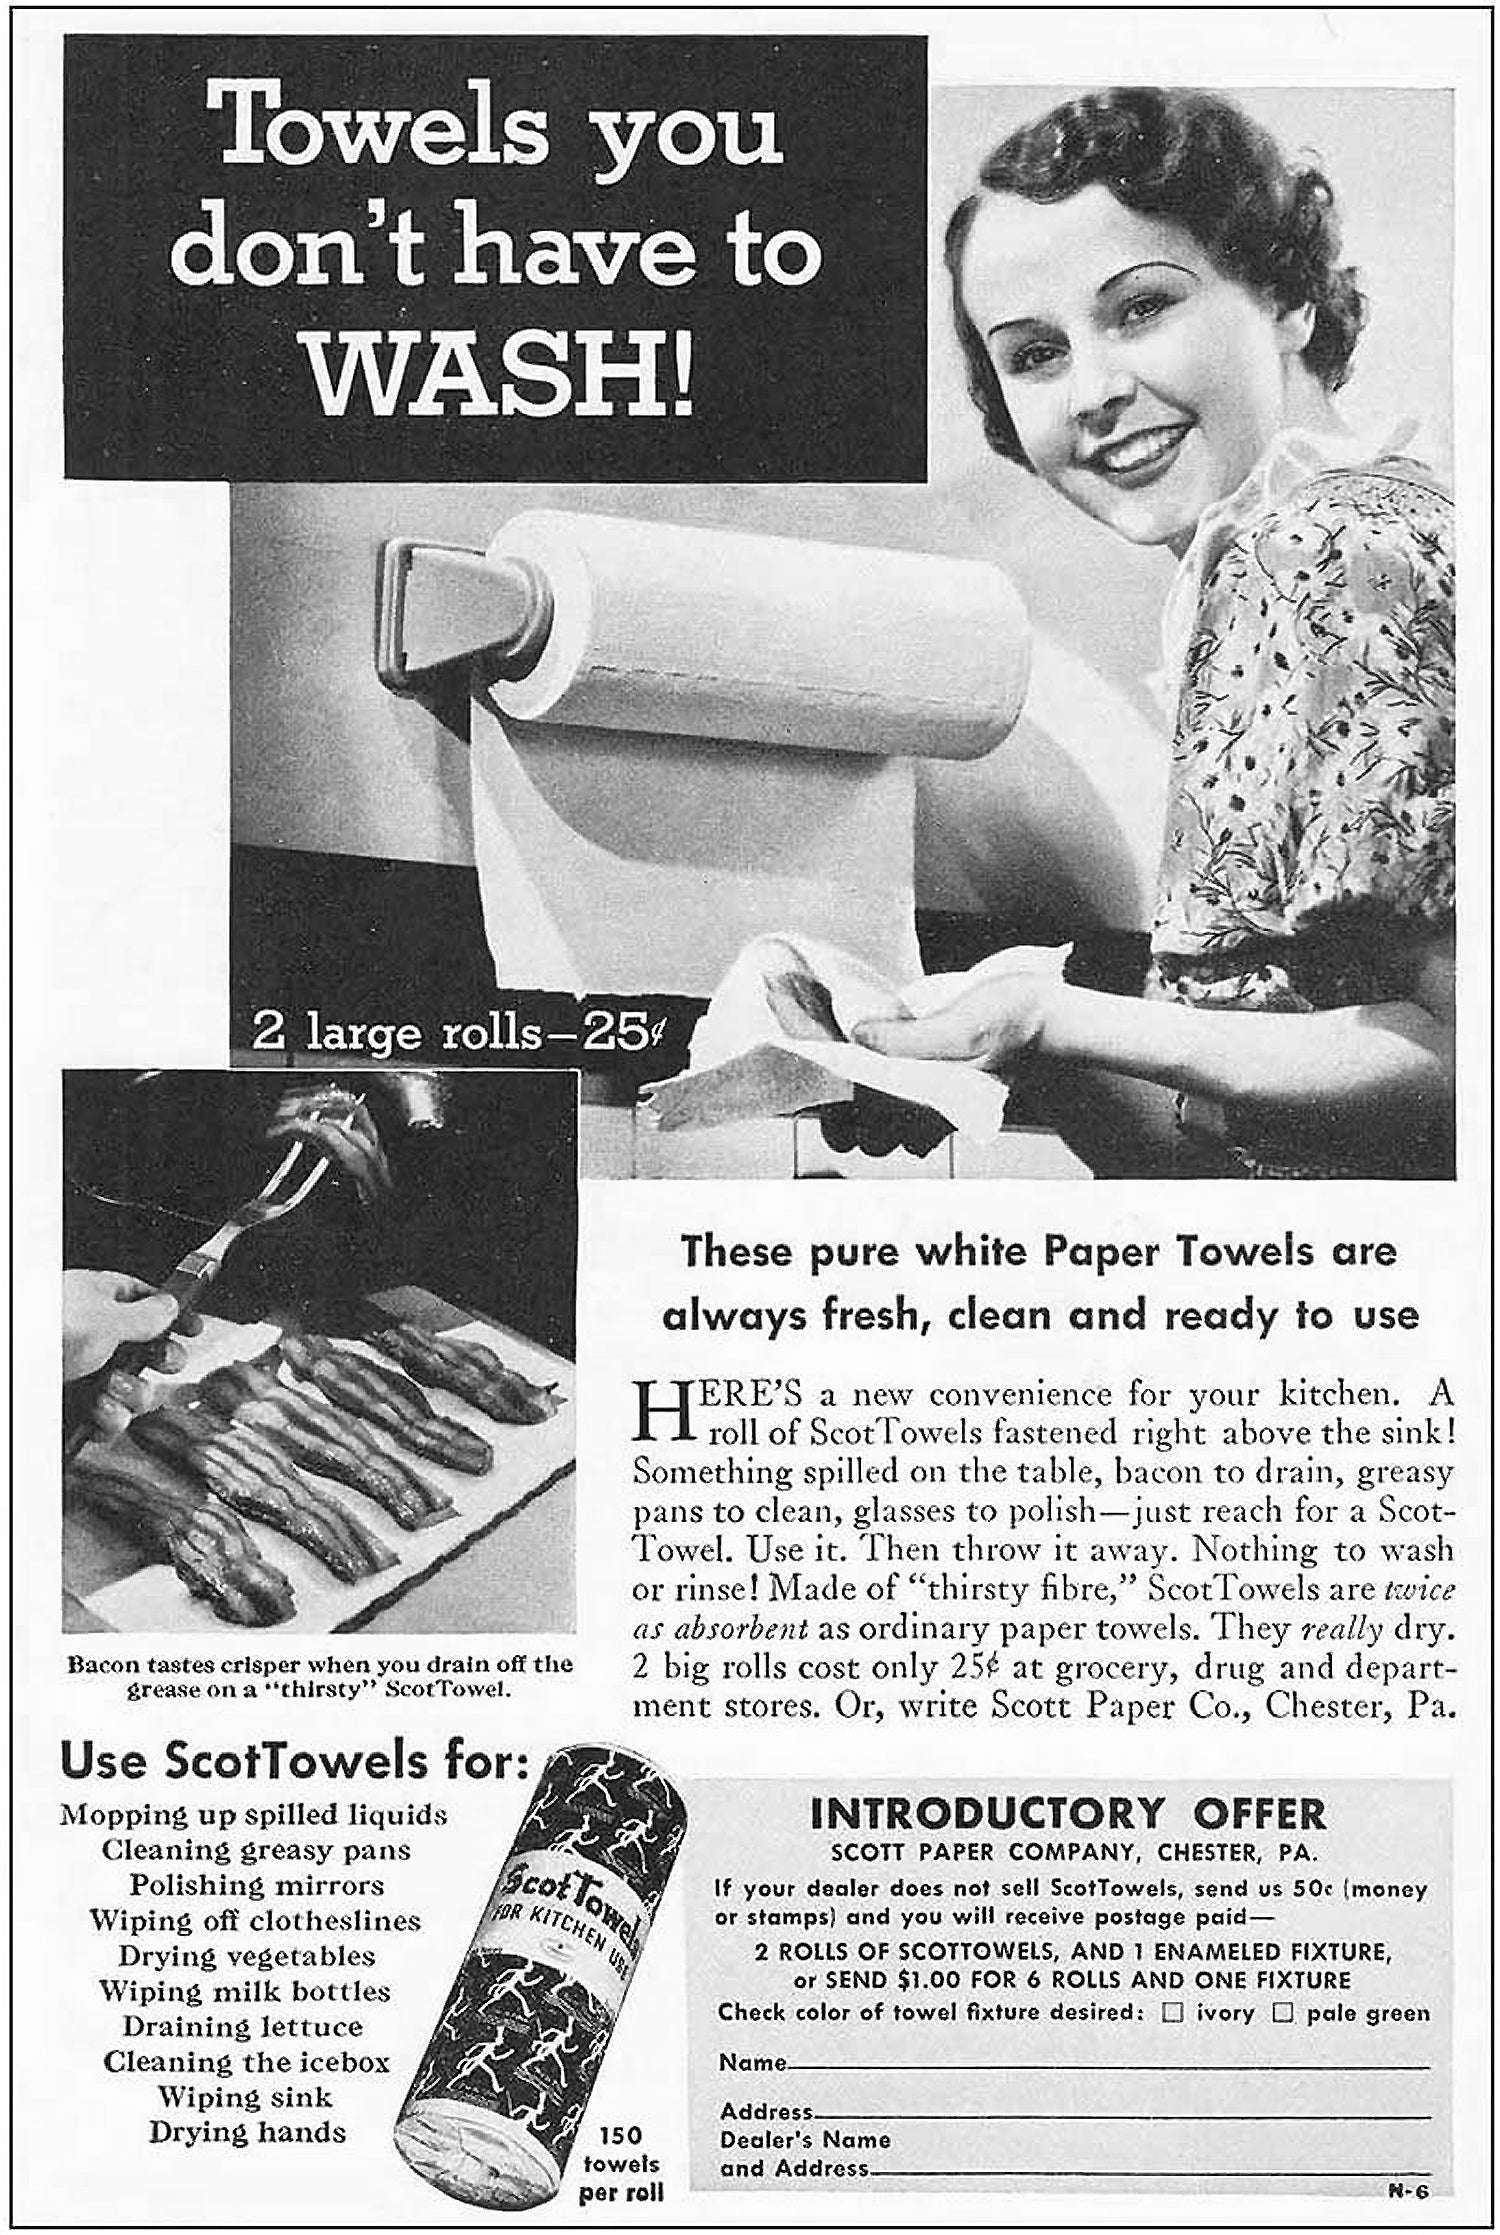 Scott Towel paper towel advertisement from 1936